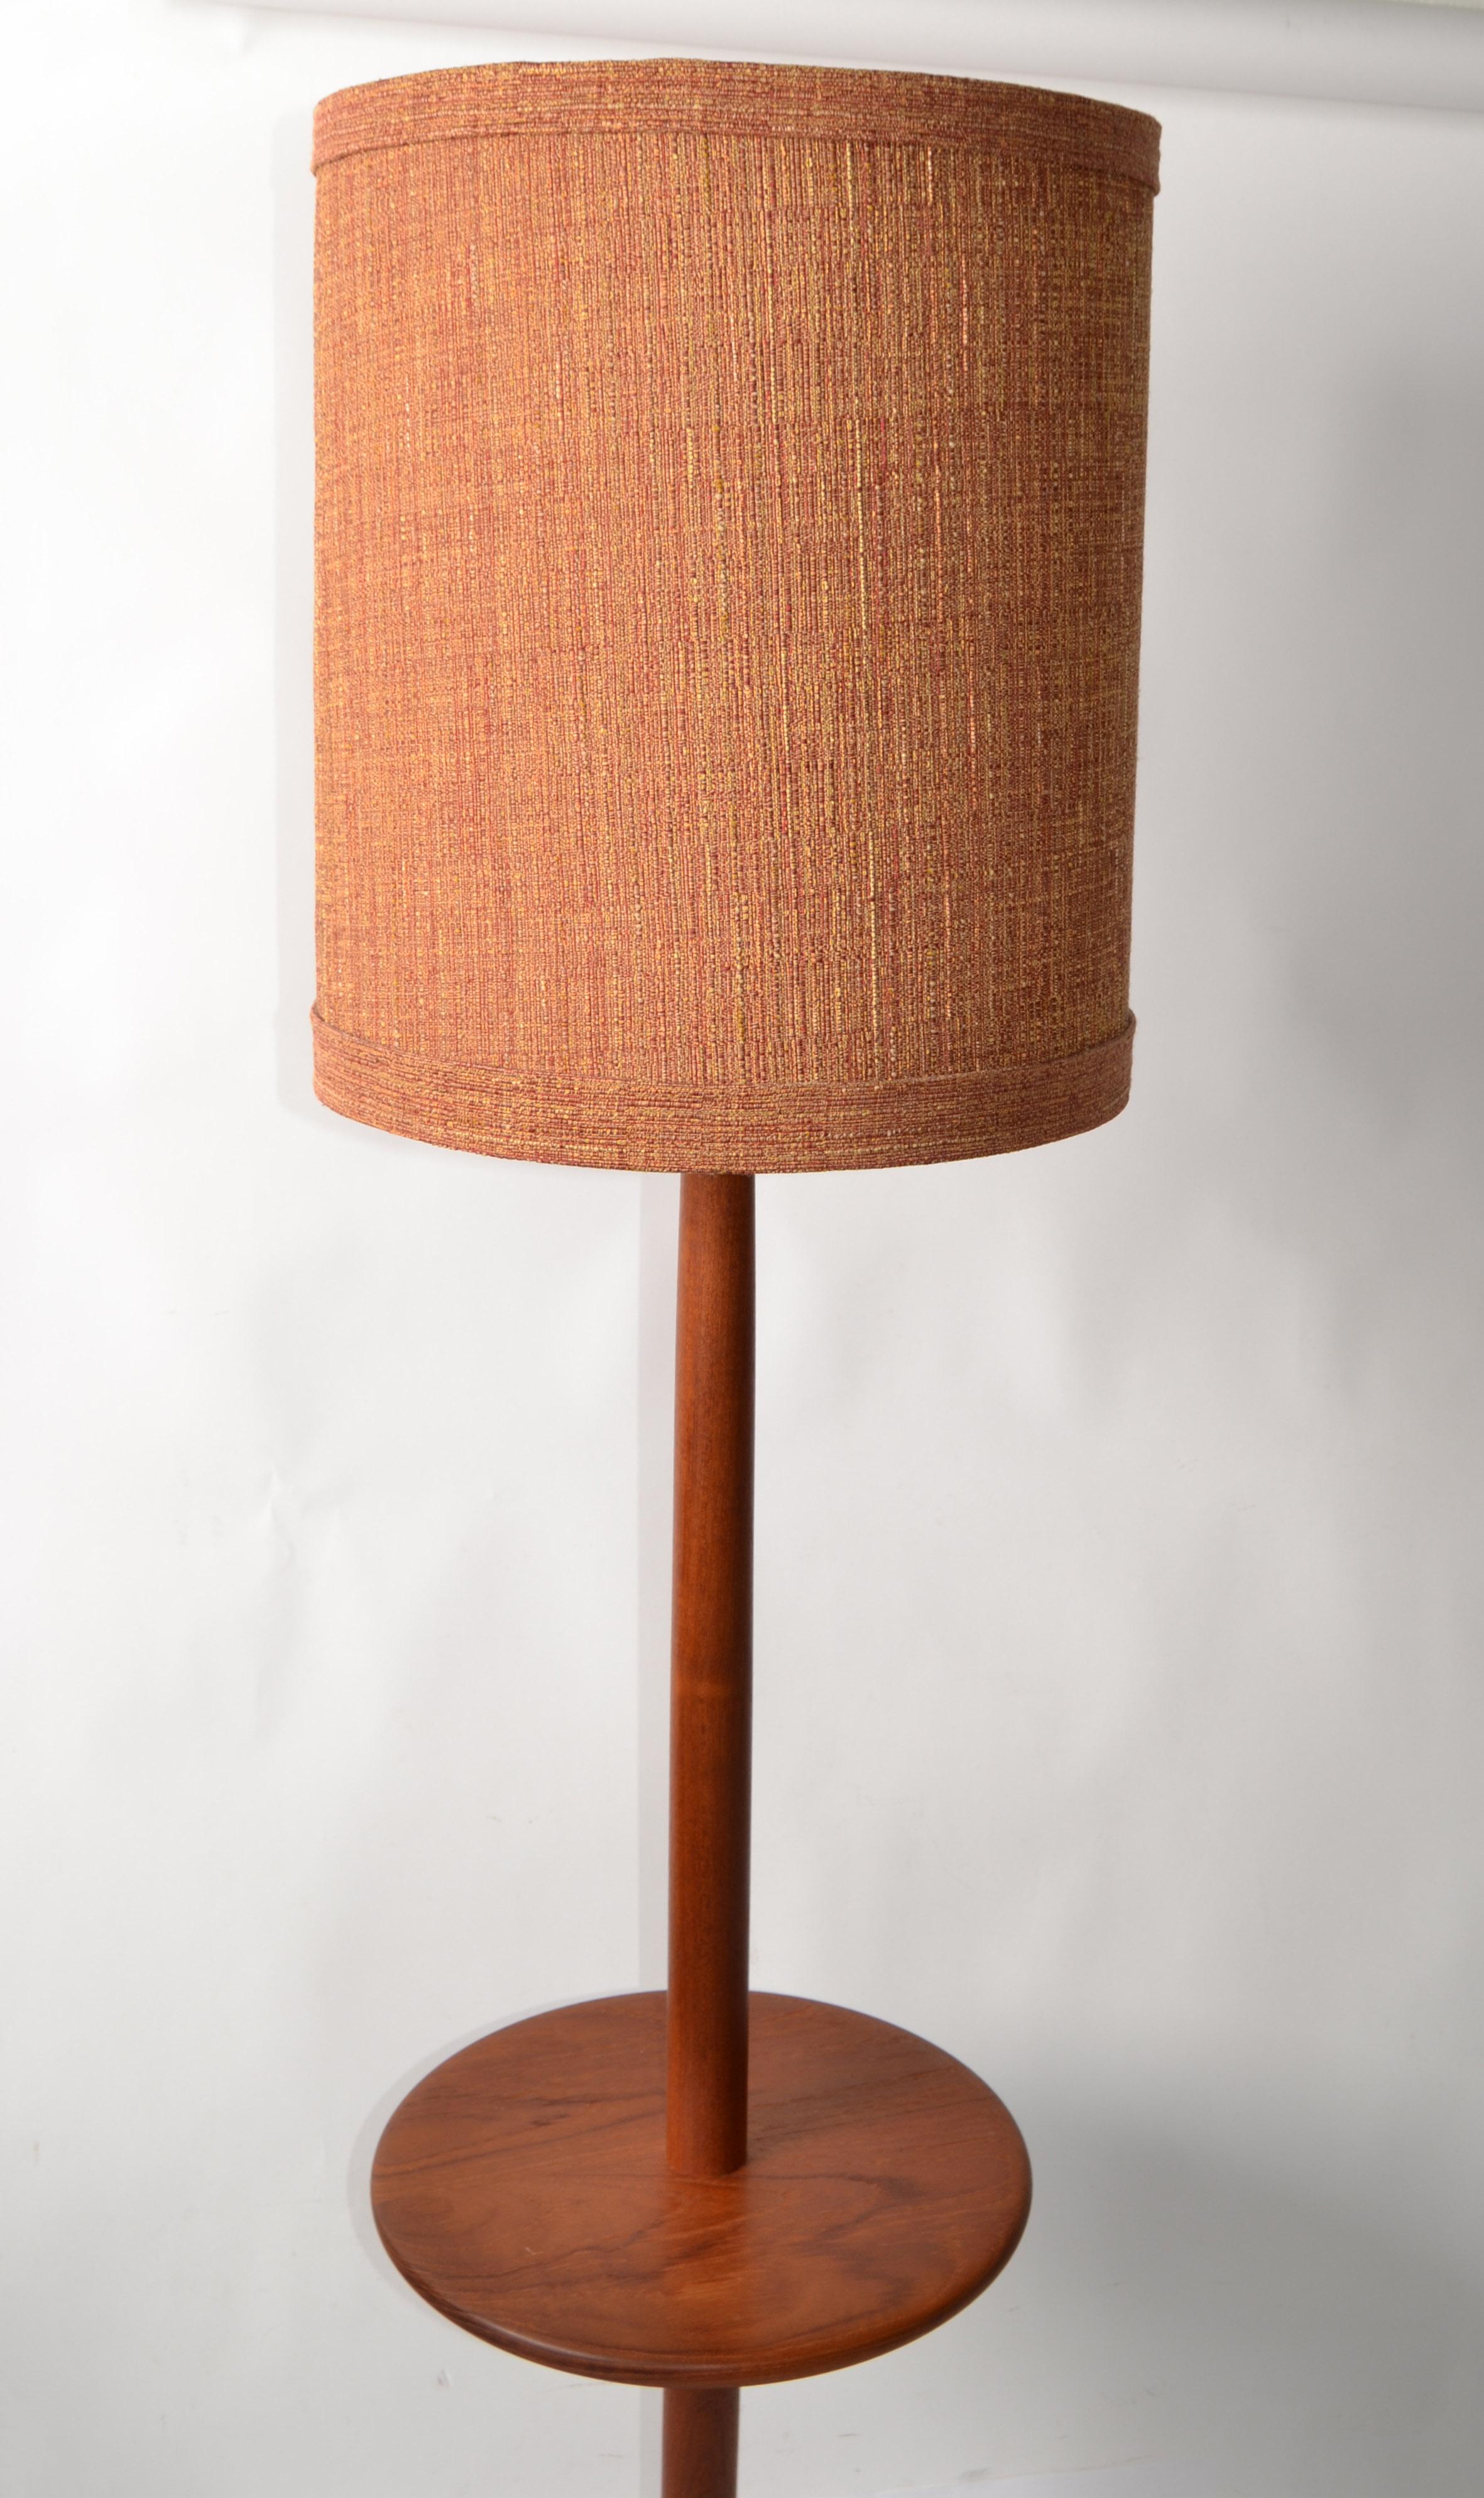 Hand-Crafted Nessen Lighting Style Turned Walnut Floor Lamp Mid-Century Modern Fabric Shade For Sale